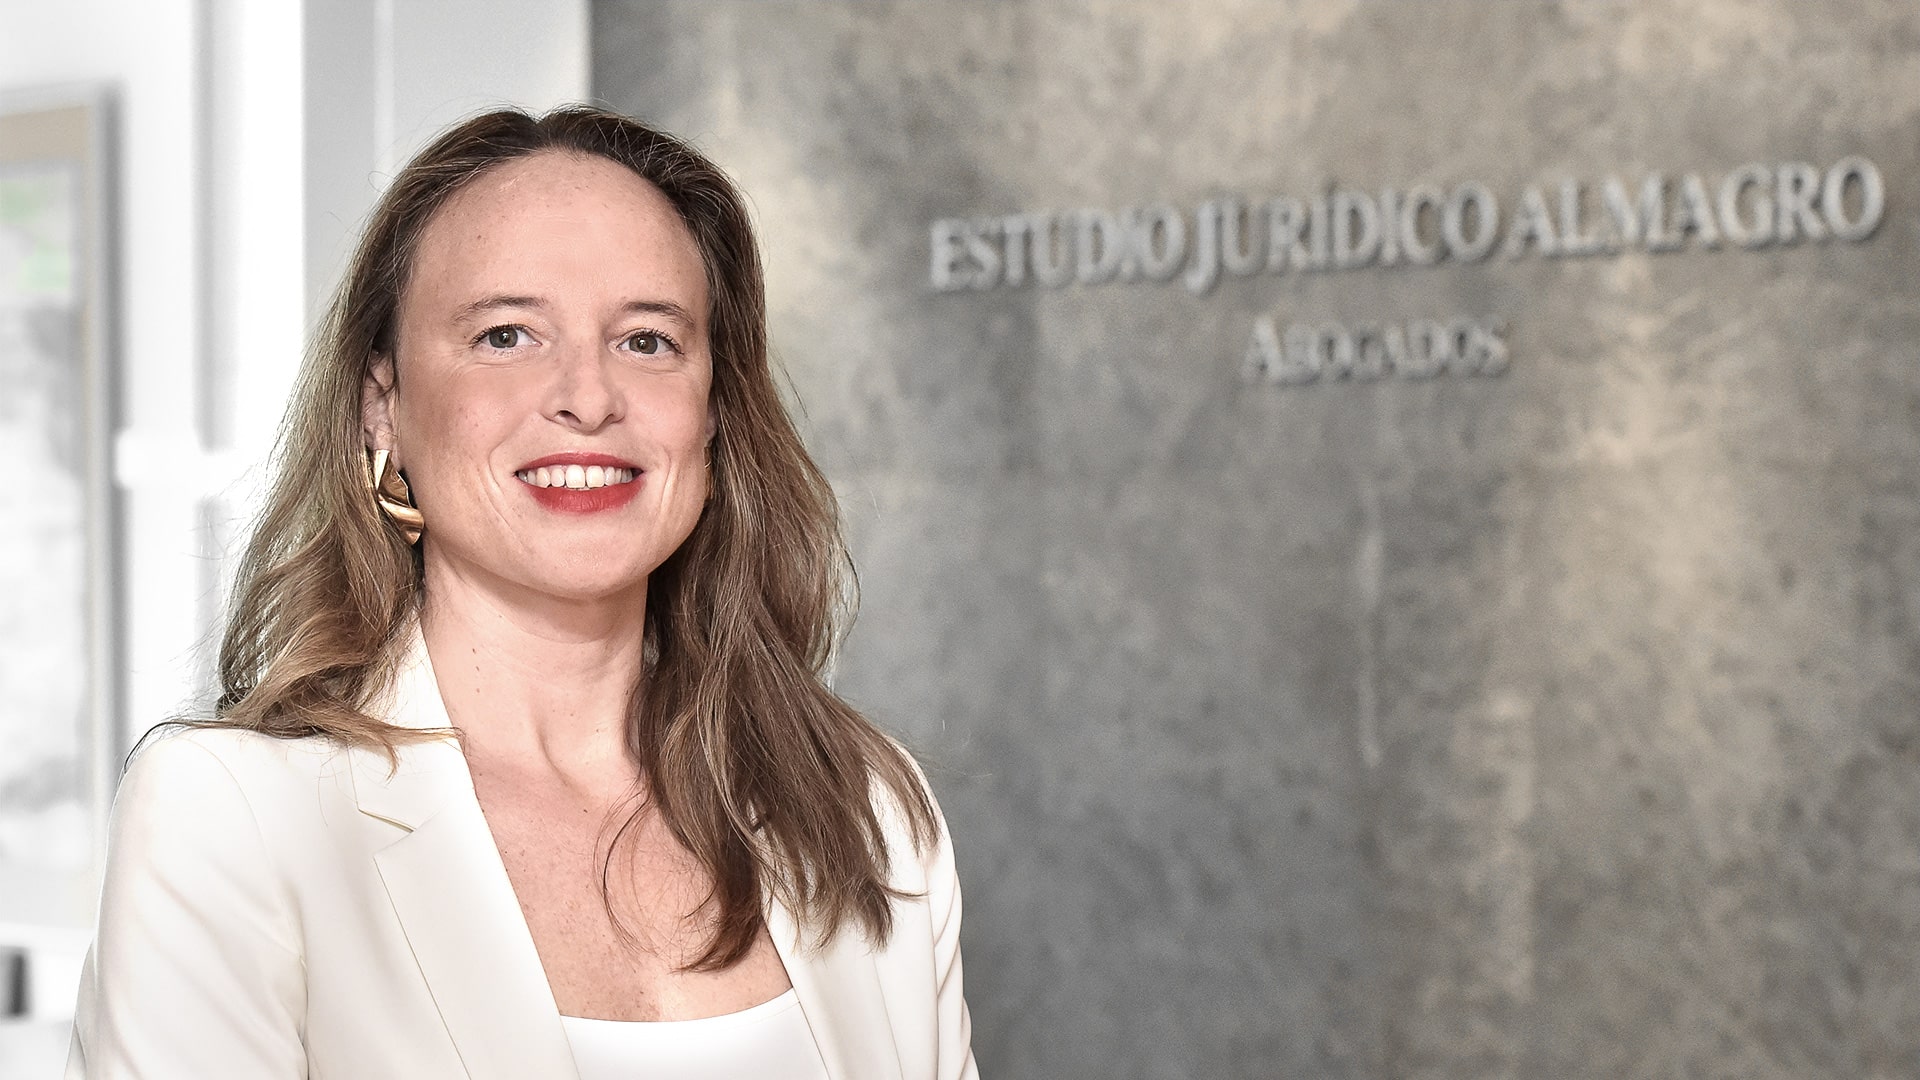 Cristina Carbonell, Estudio Jurídico Almagro (EJA)